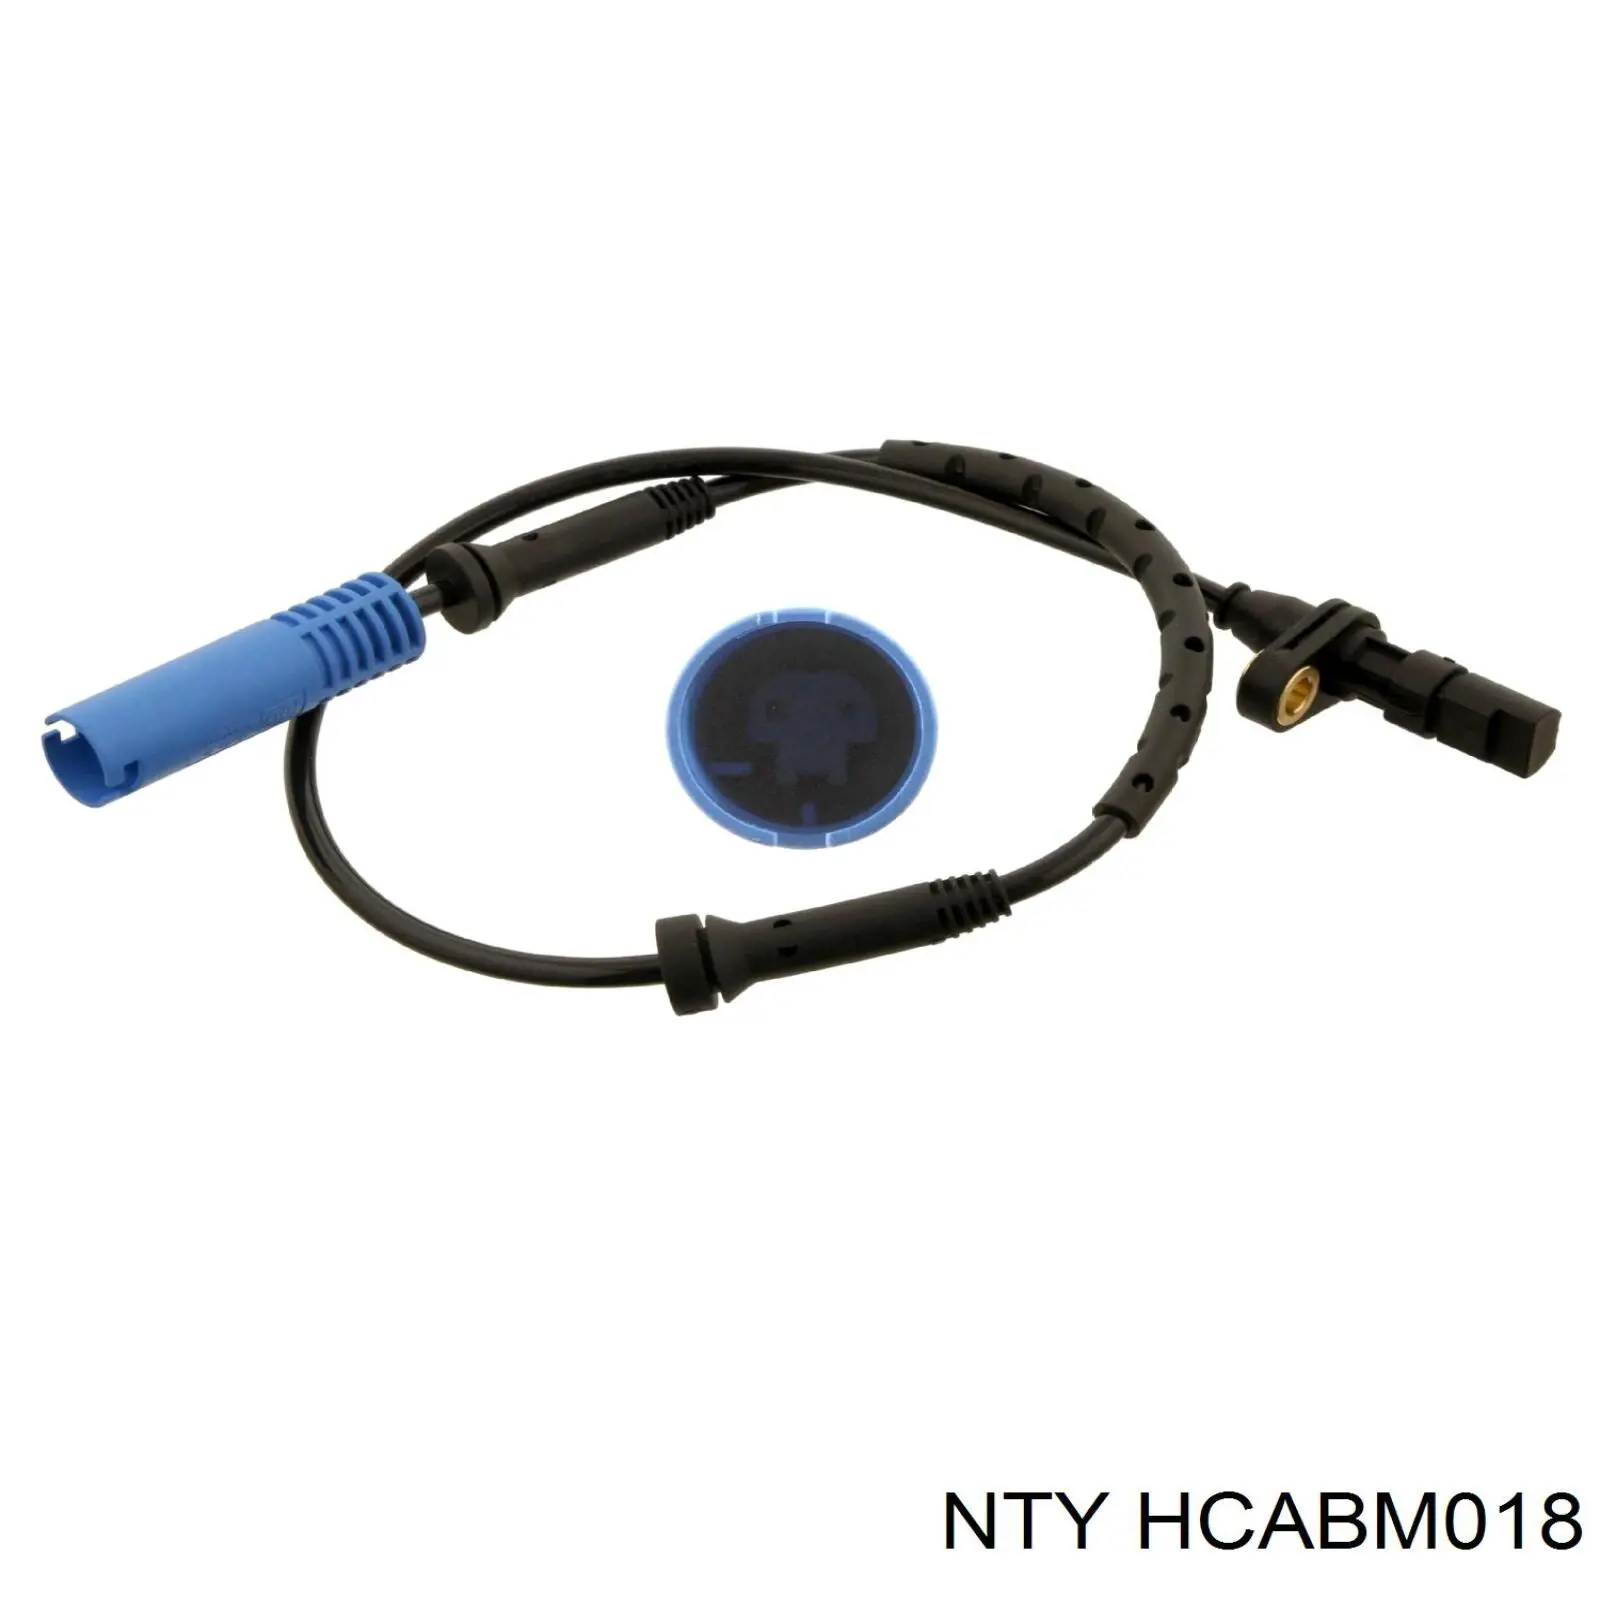 HCA-BM-018 NTY датчик абс (abs передний)